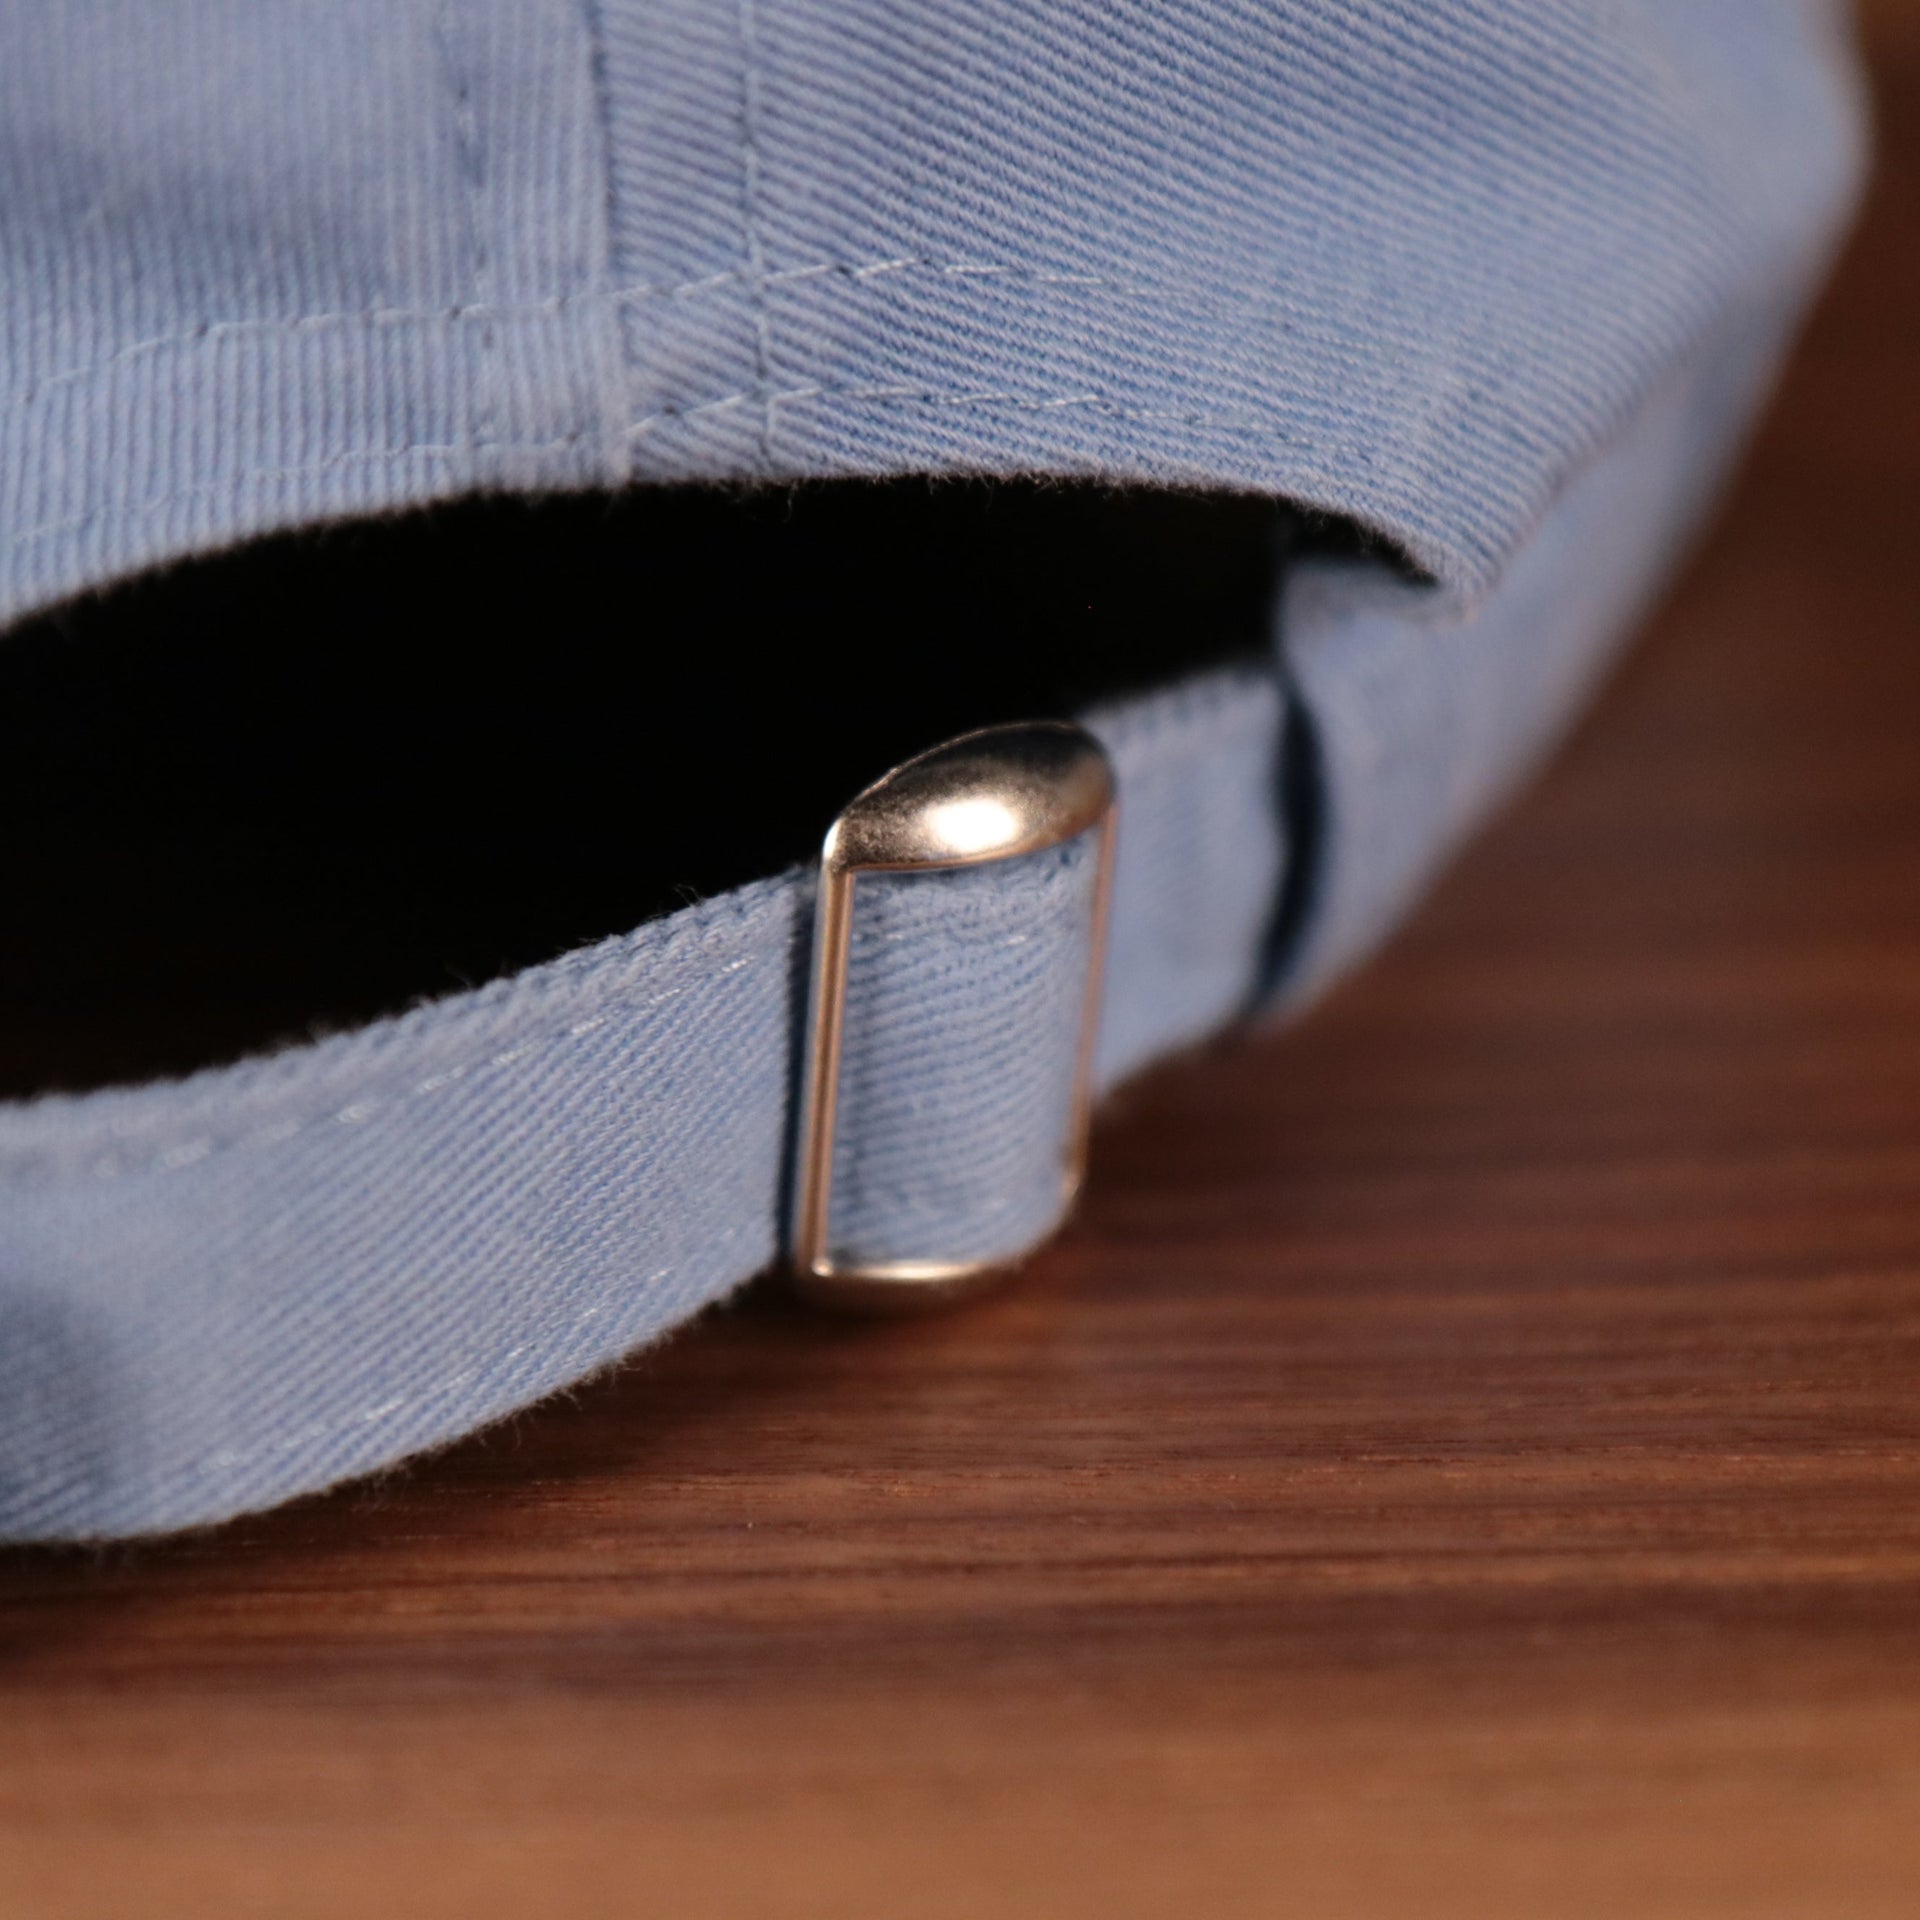 adjustable strap on the back of the North Carolina Tar Heels Carolina Blue 9Twenty Adjustable Dad Hat